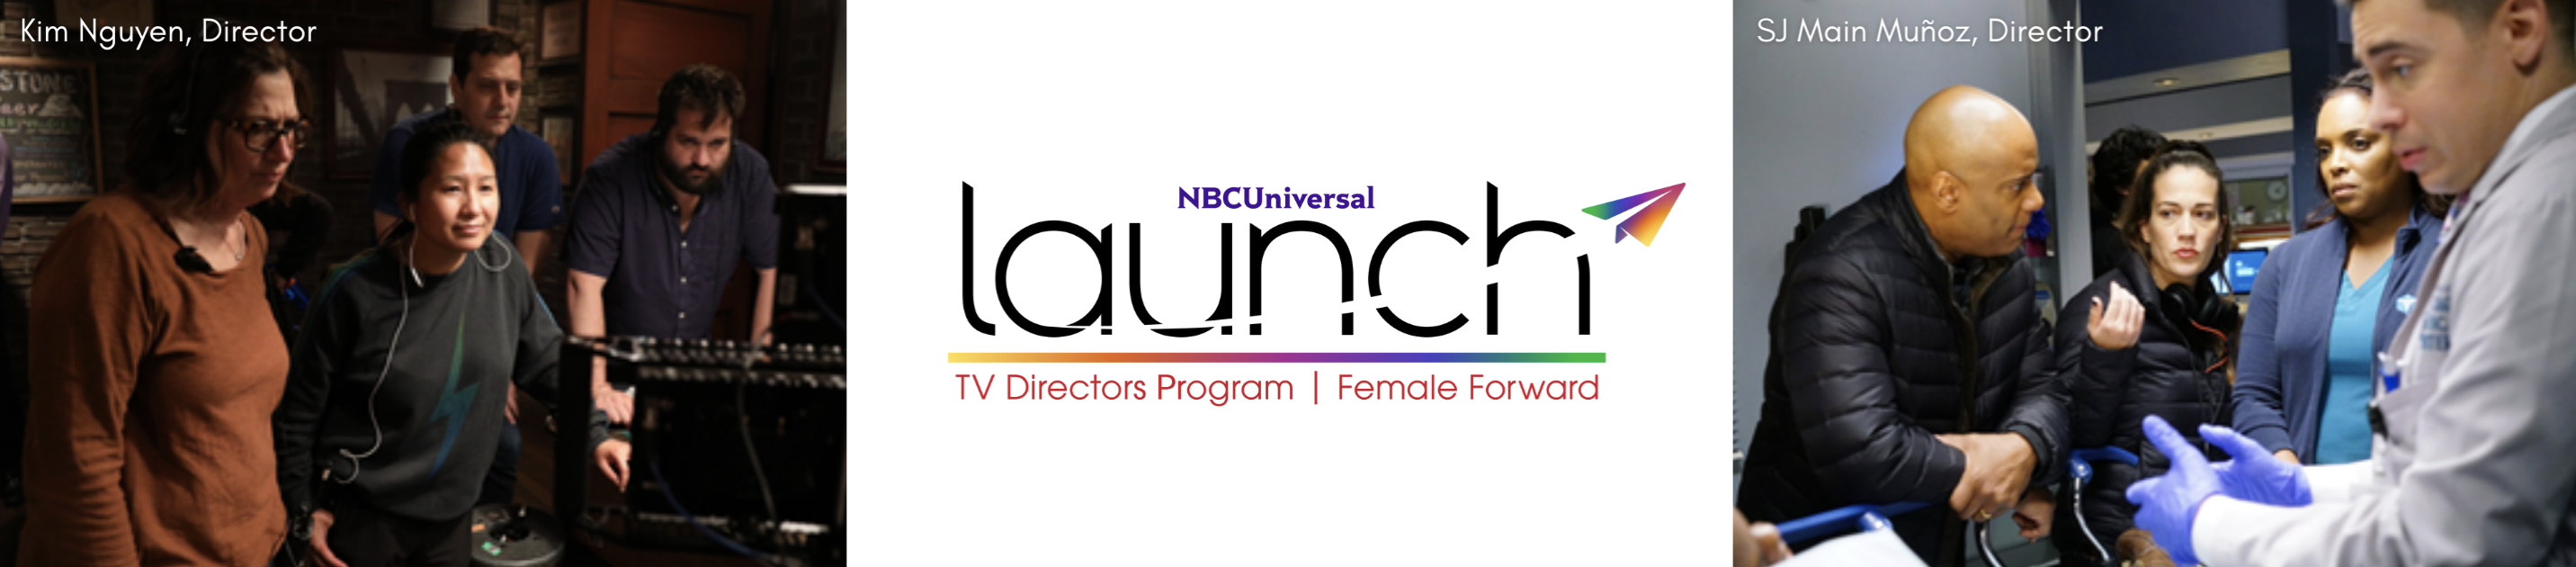 NBCU Launch + Telemundo